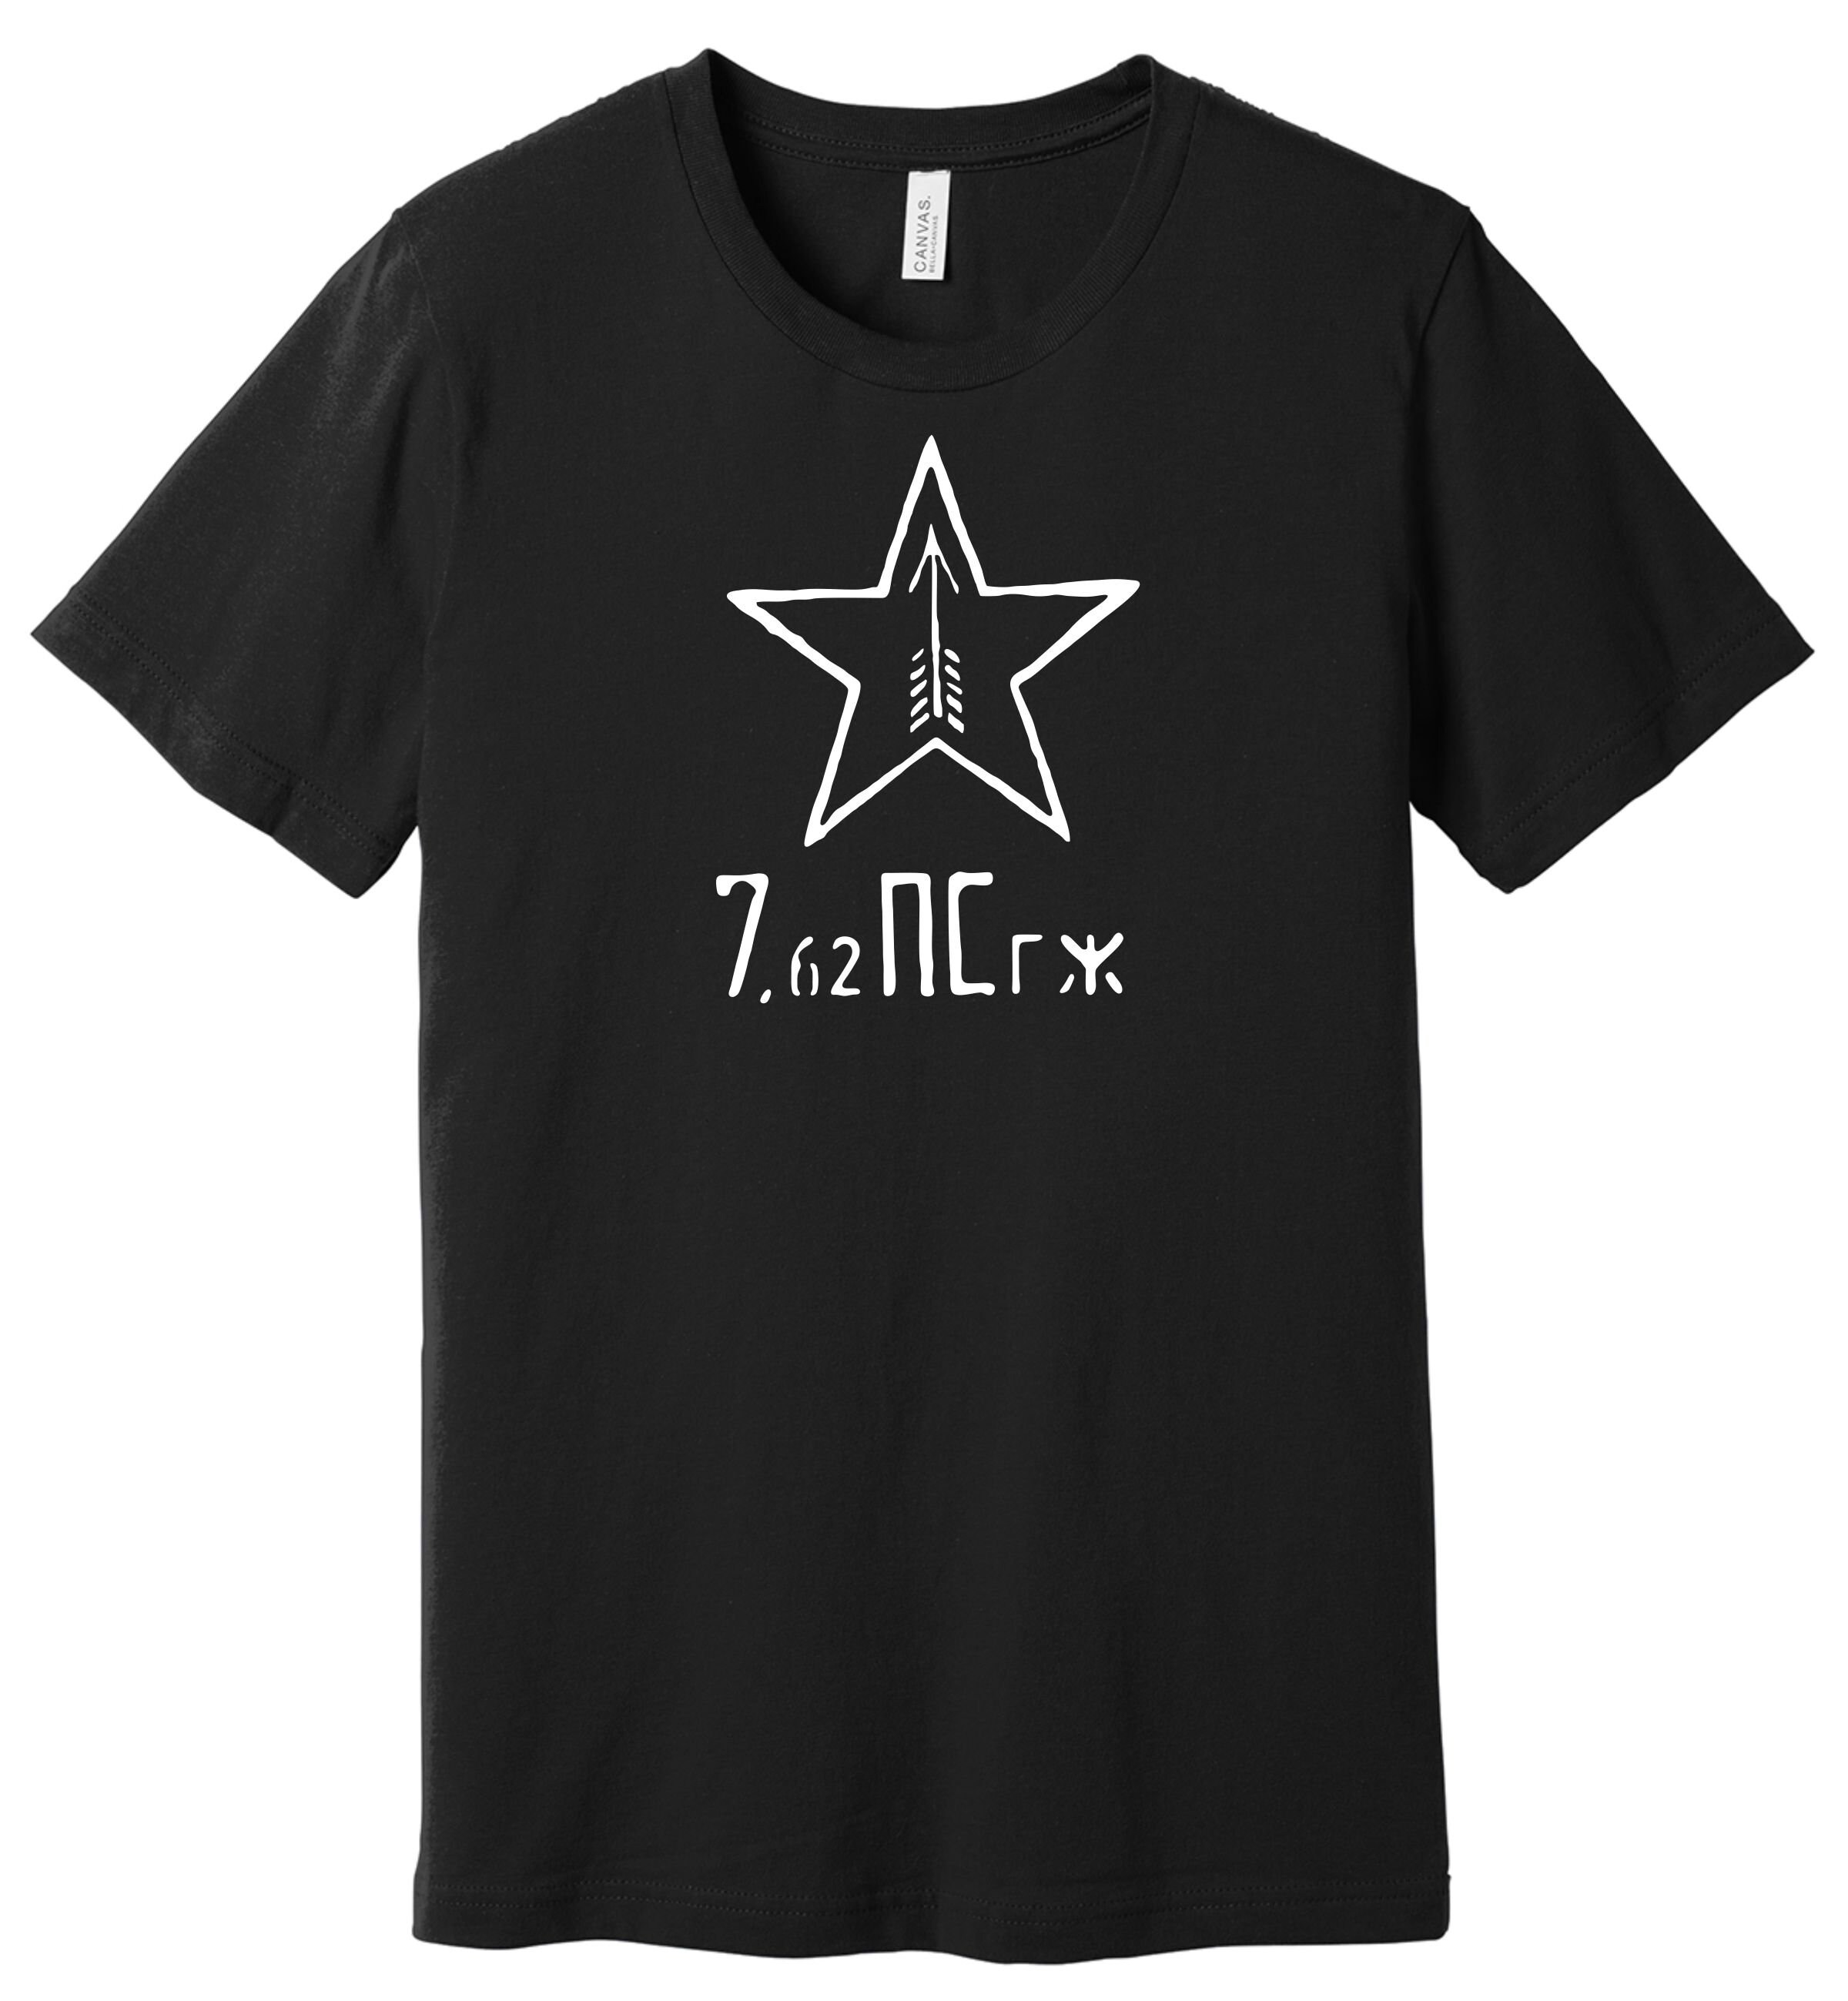 Mosin Nagant 7.62x54r Tula Star Tee Shirt Black - Etsy